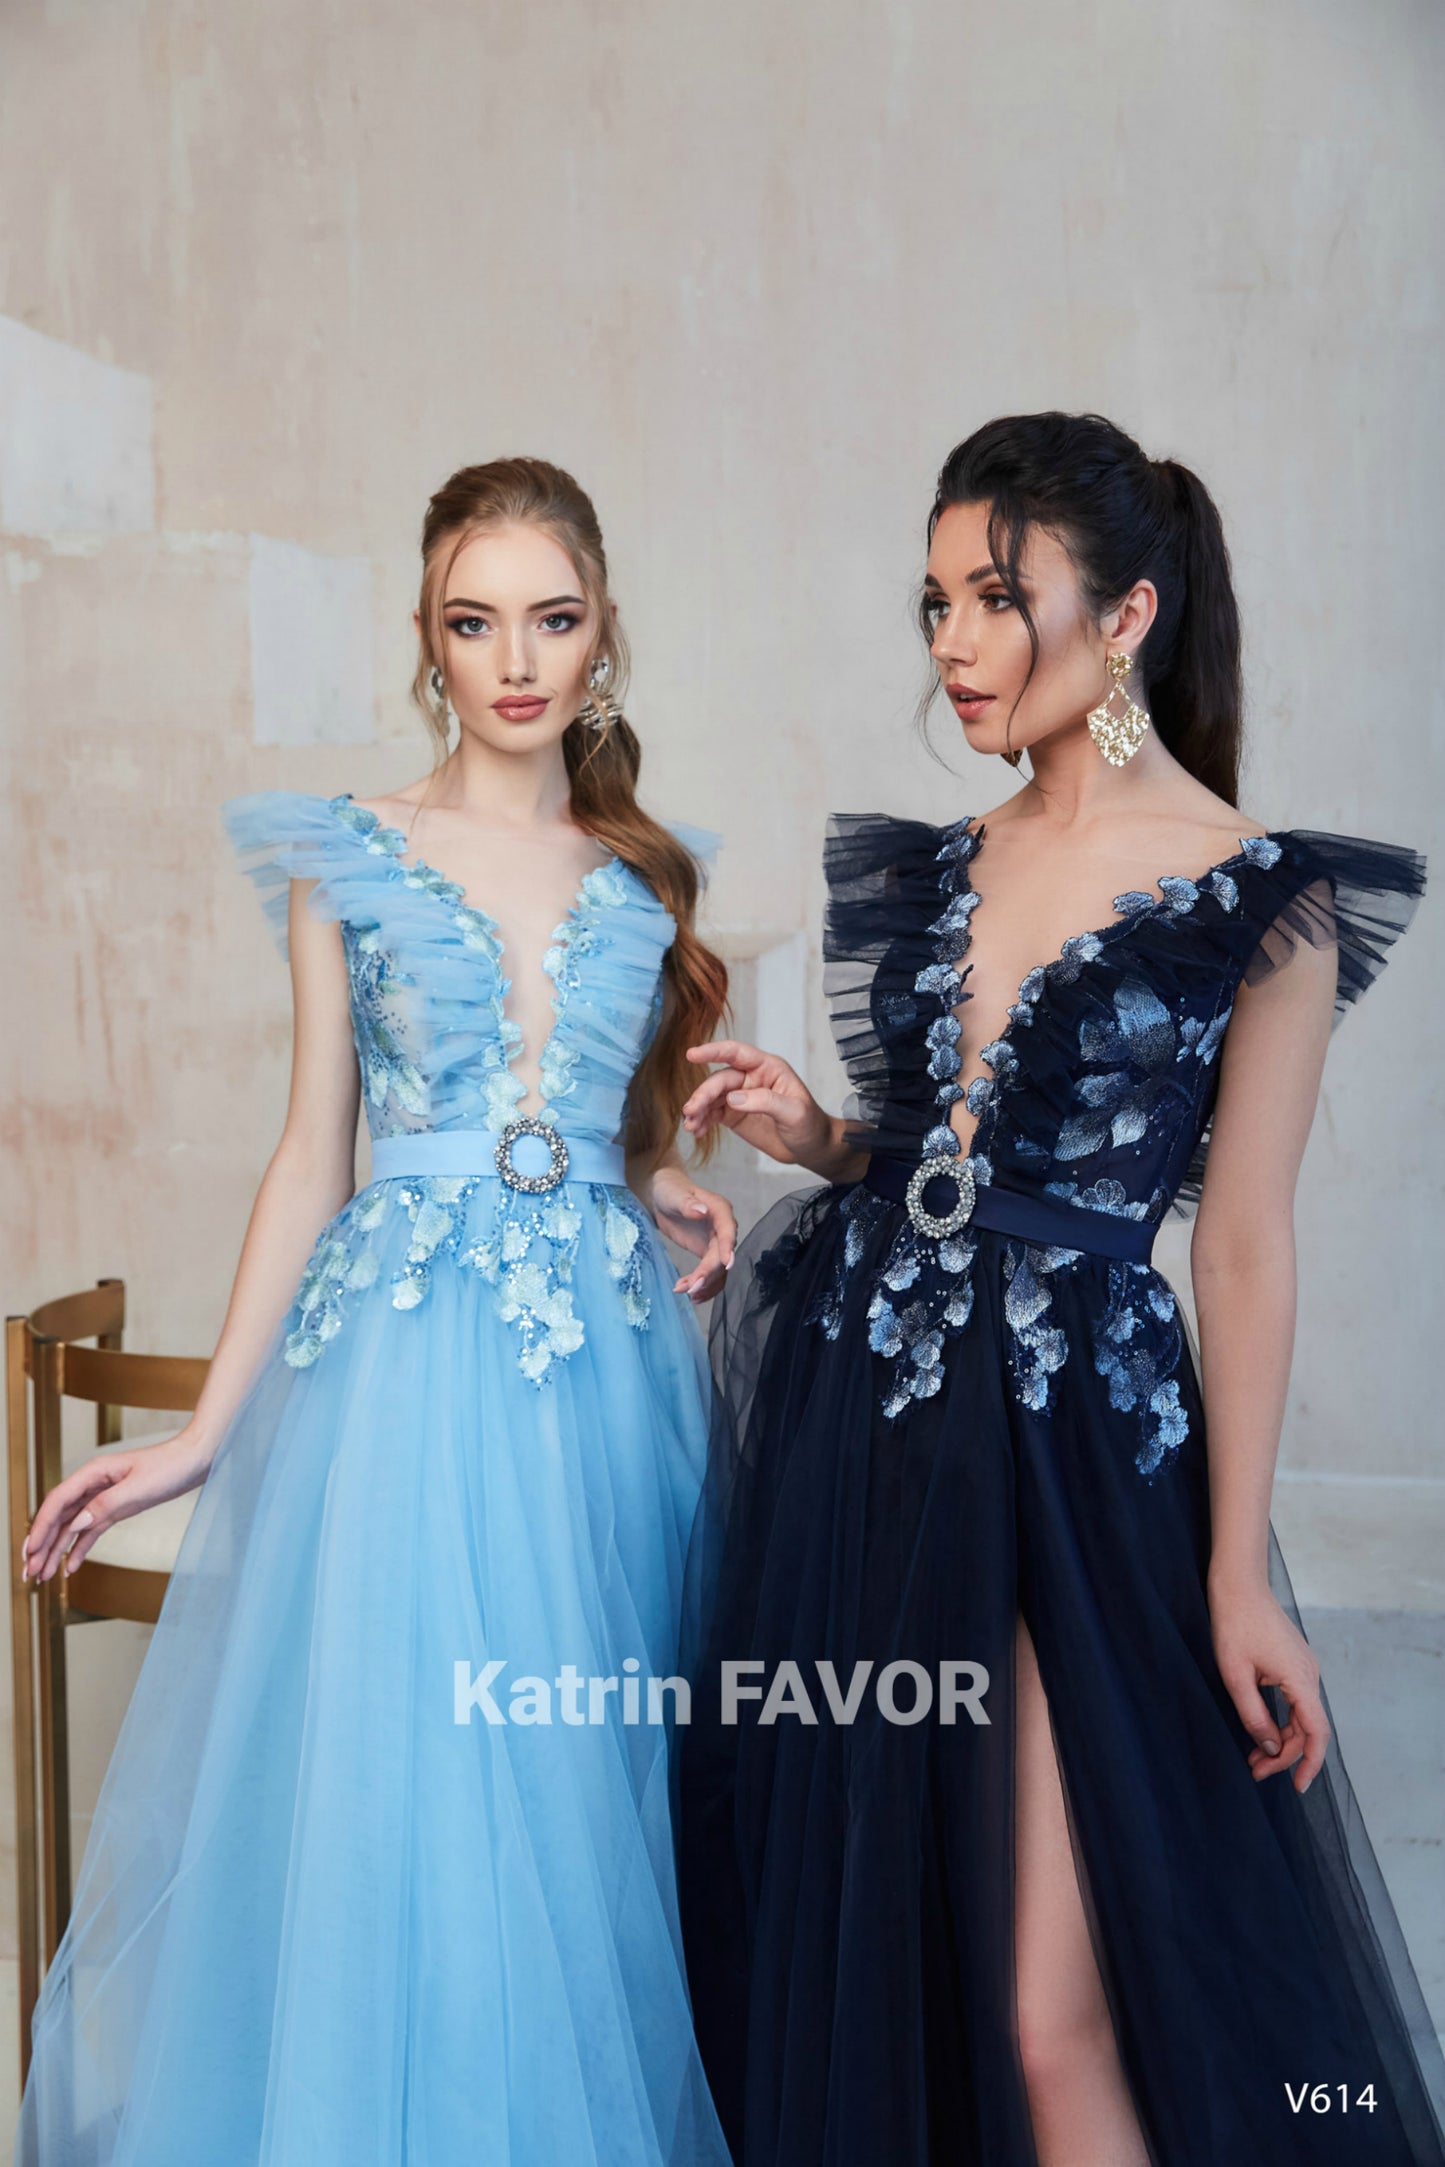 Blue fairytale evening gown